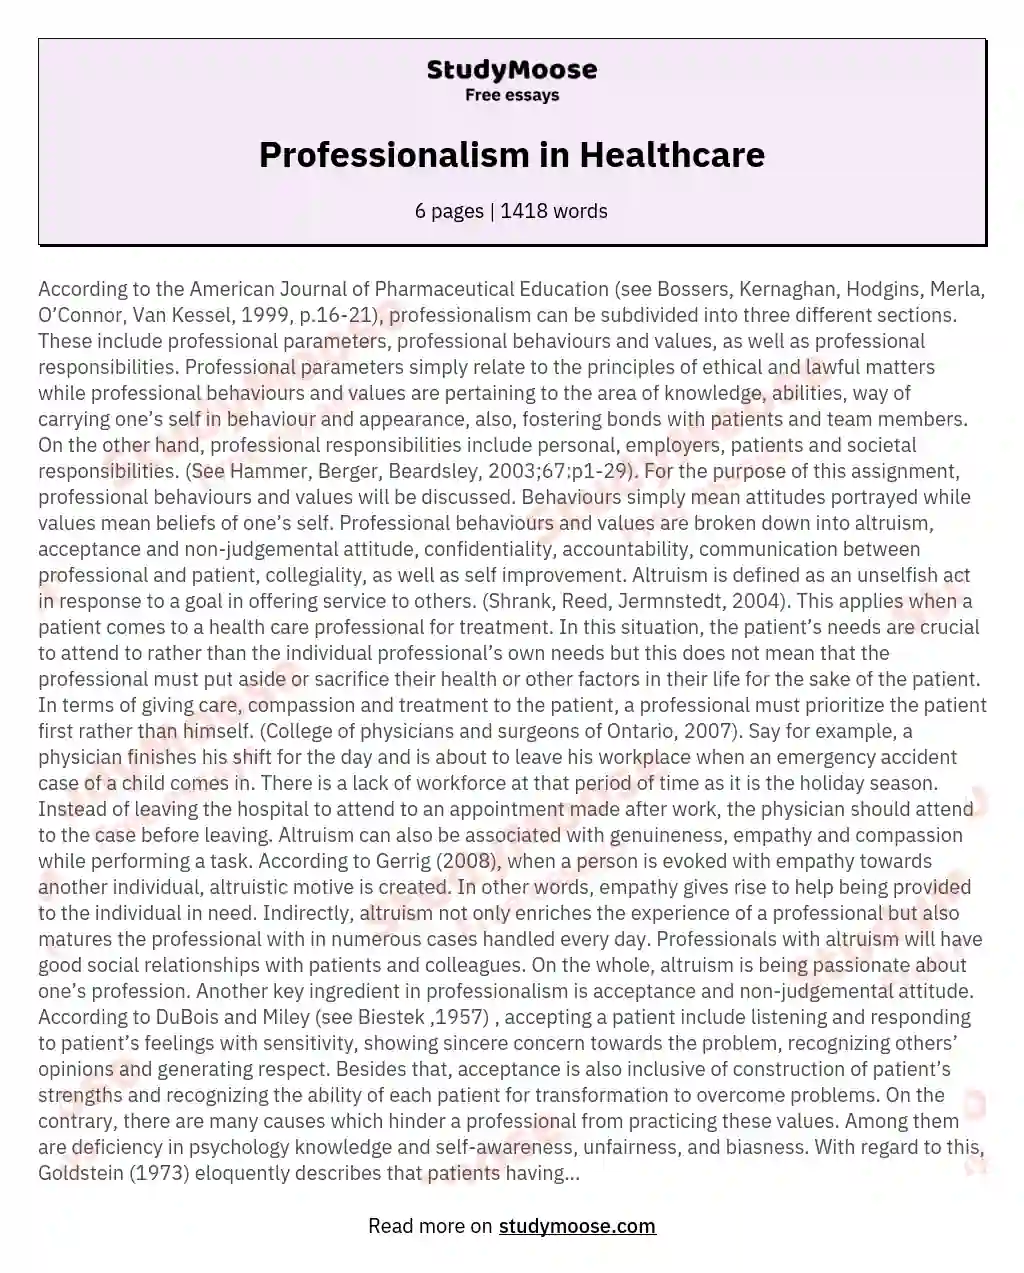 essay on professionalism